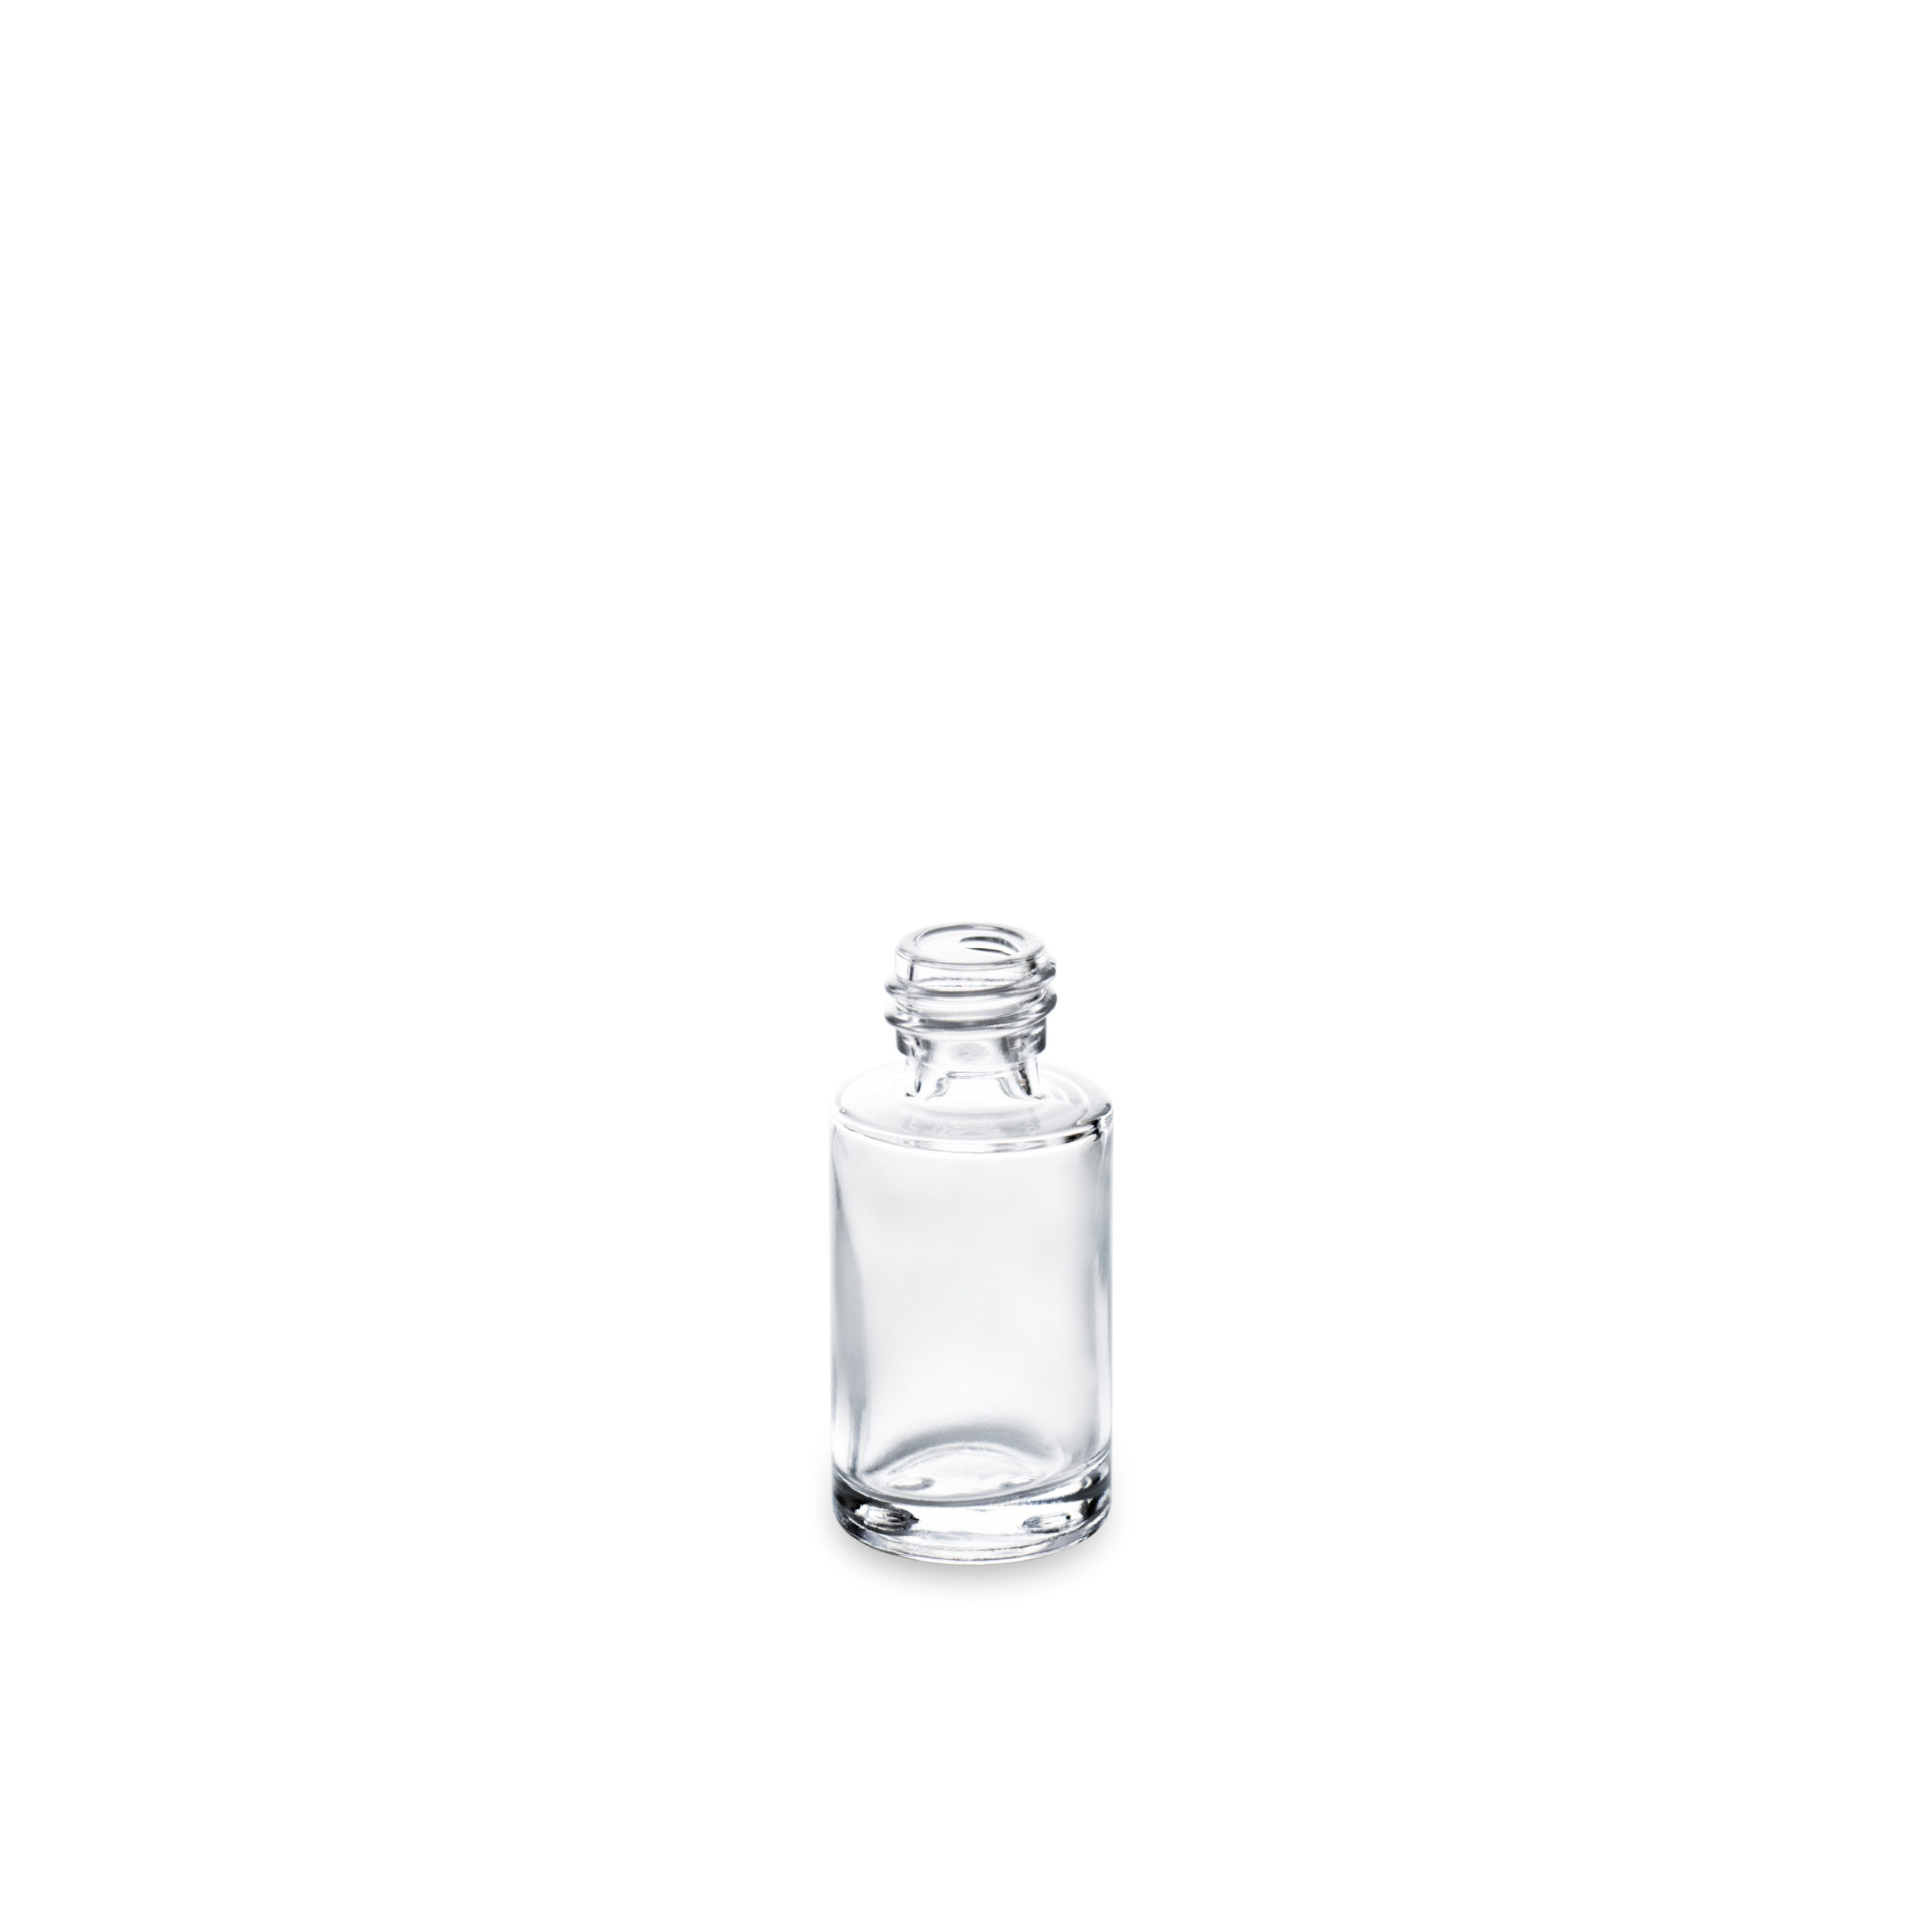 Aurore glass cosmetic bottle in 15 ml